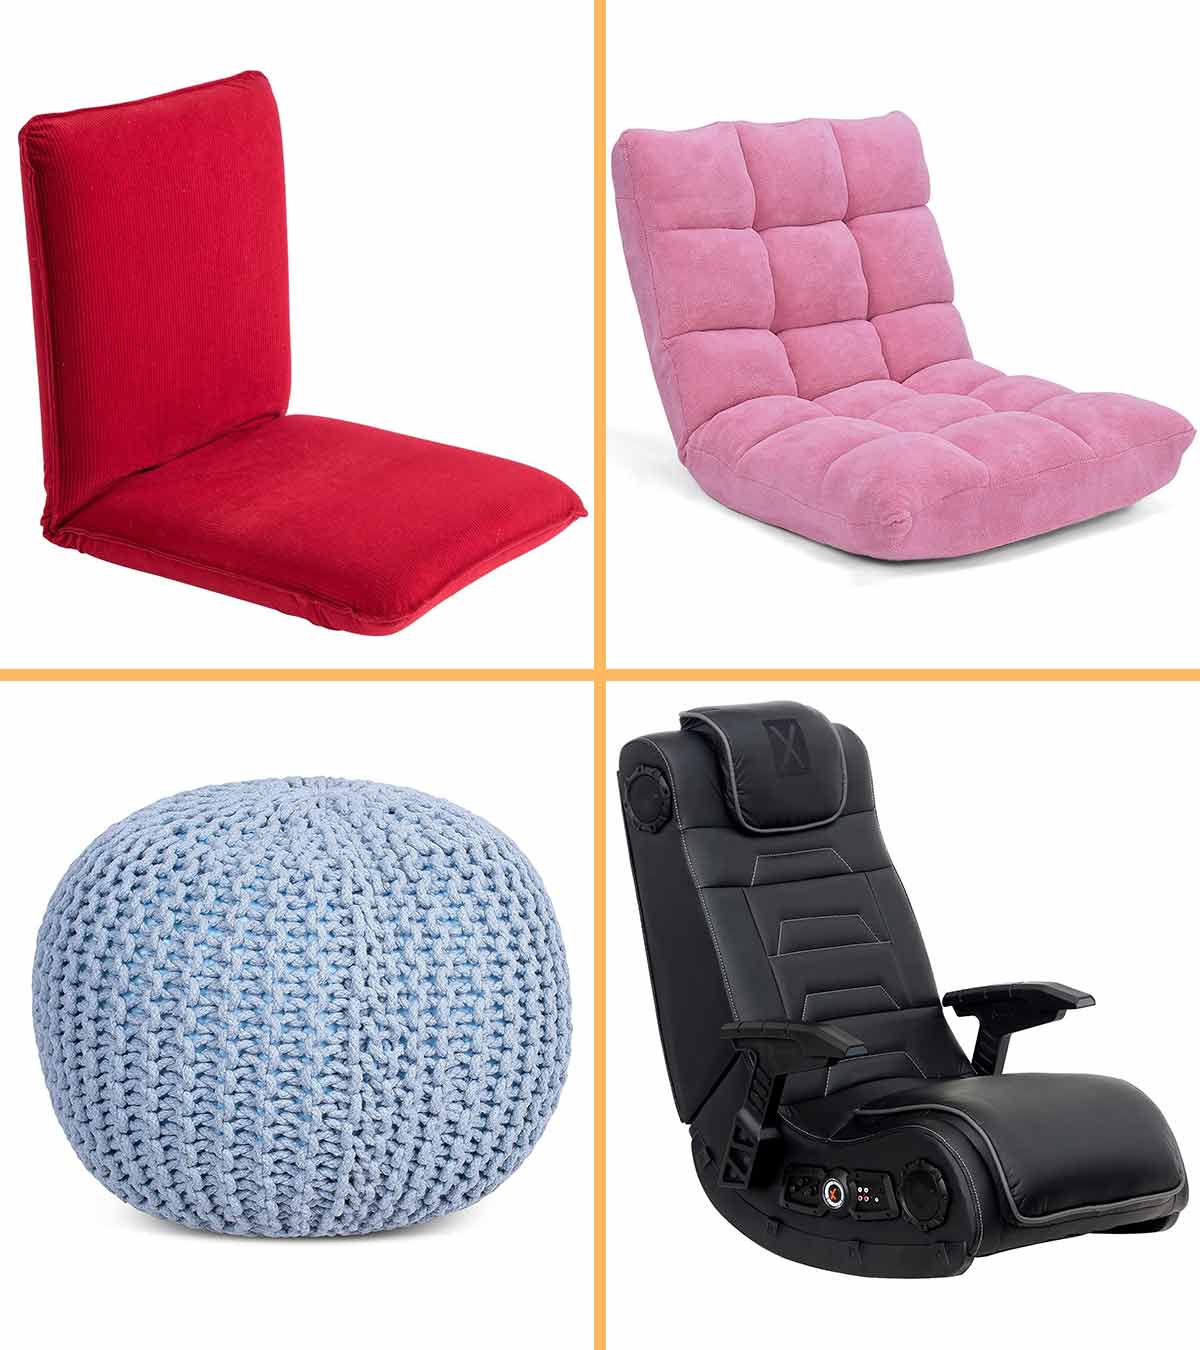 https://www.momjunction.com/wp-content/uploads/2020/06/17-Best-Floor-Chairs-of-2020.jpg